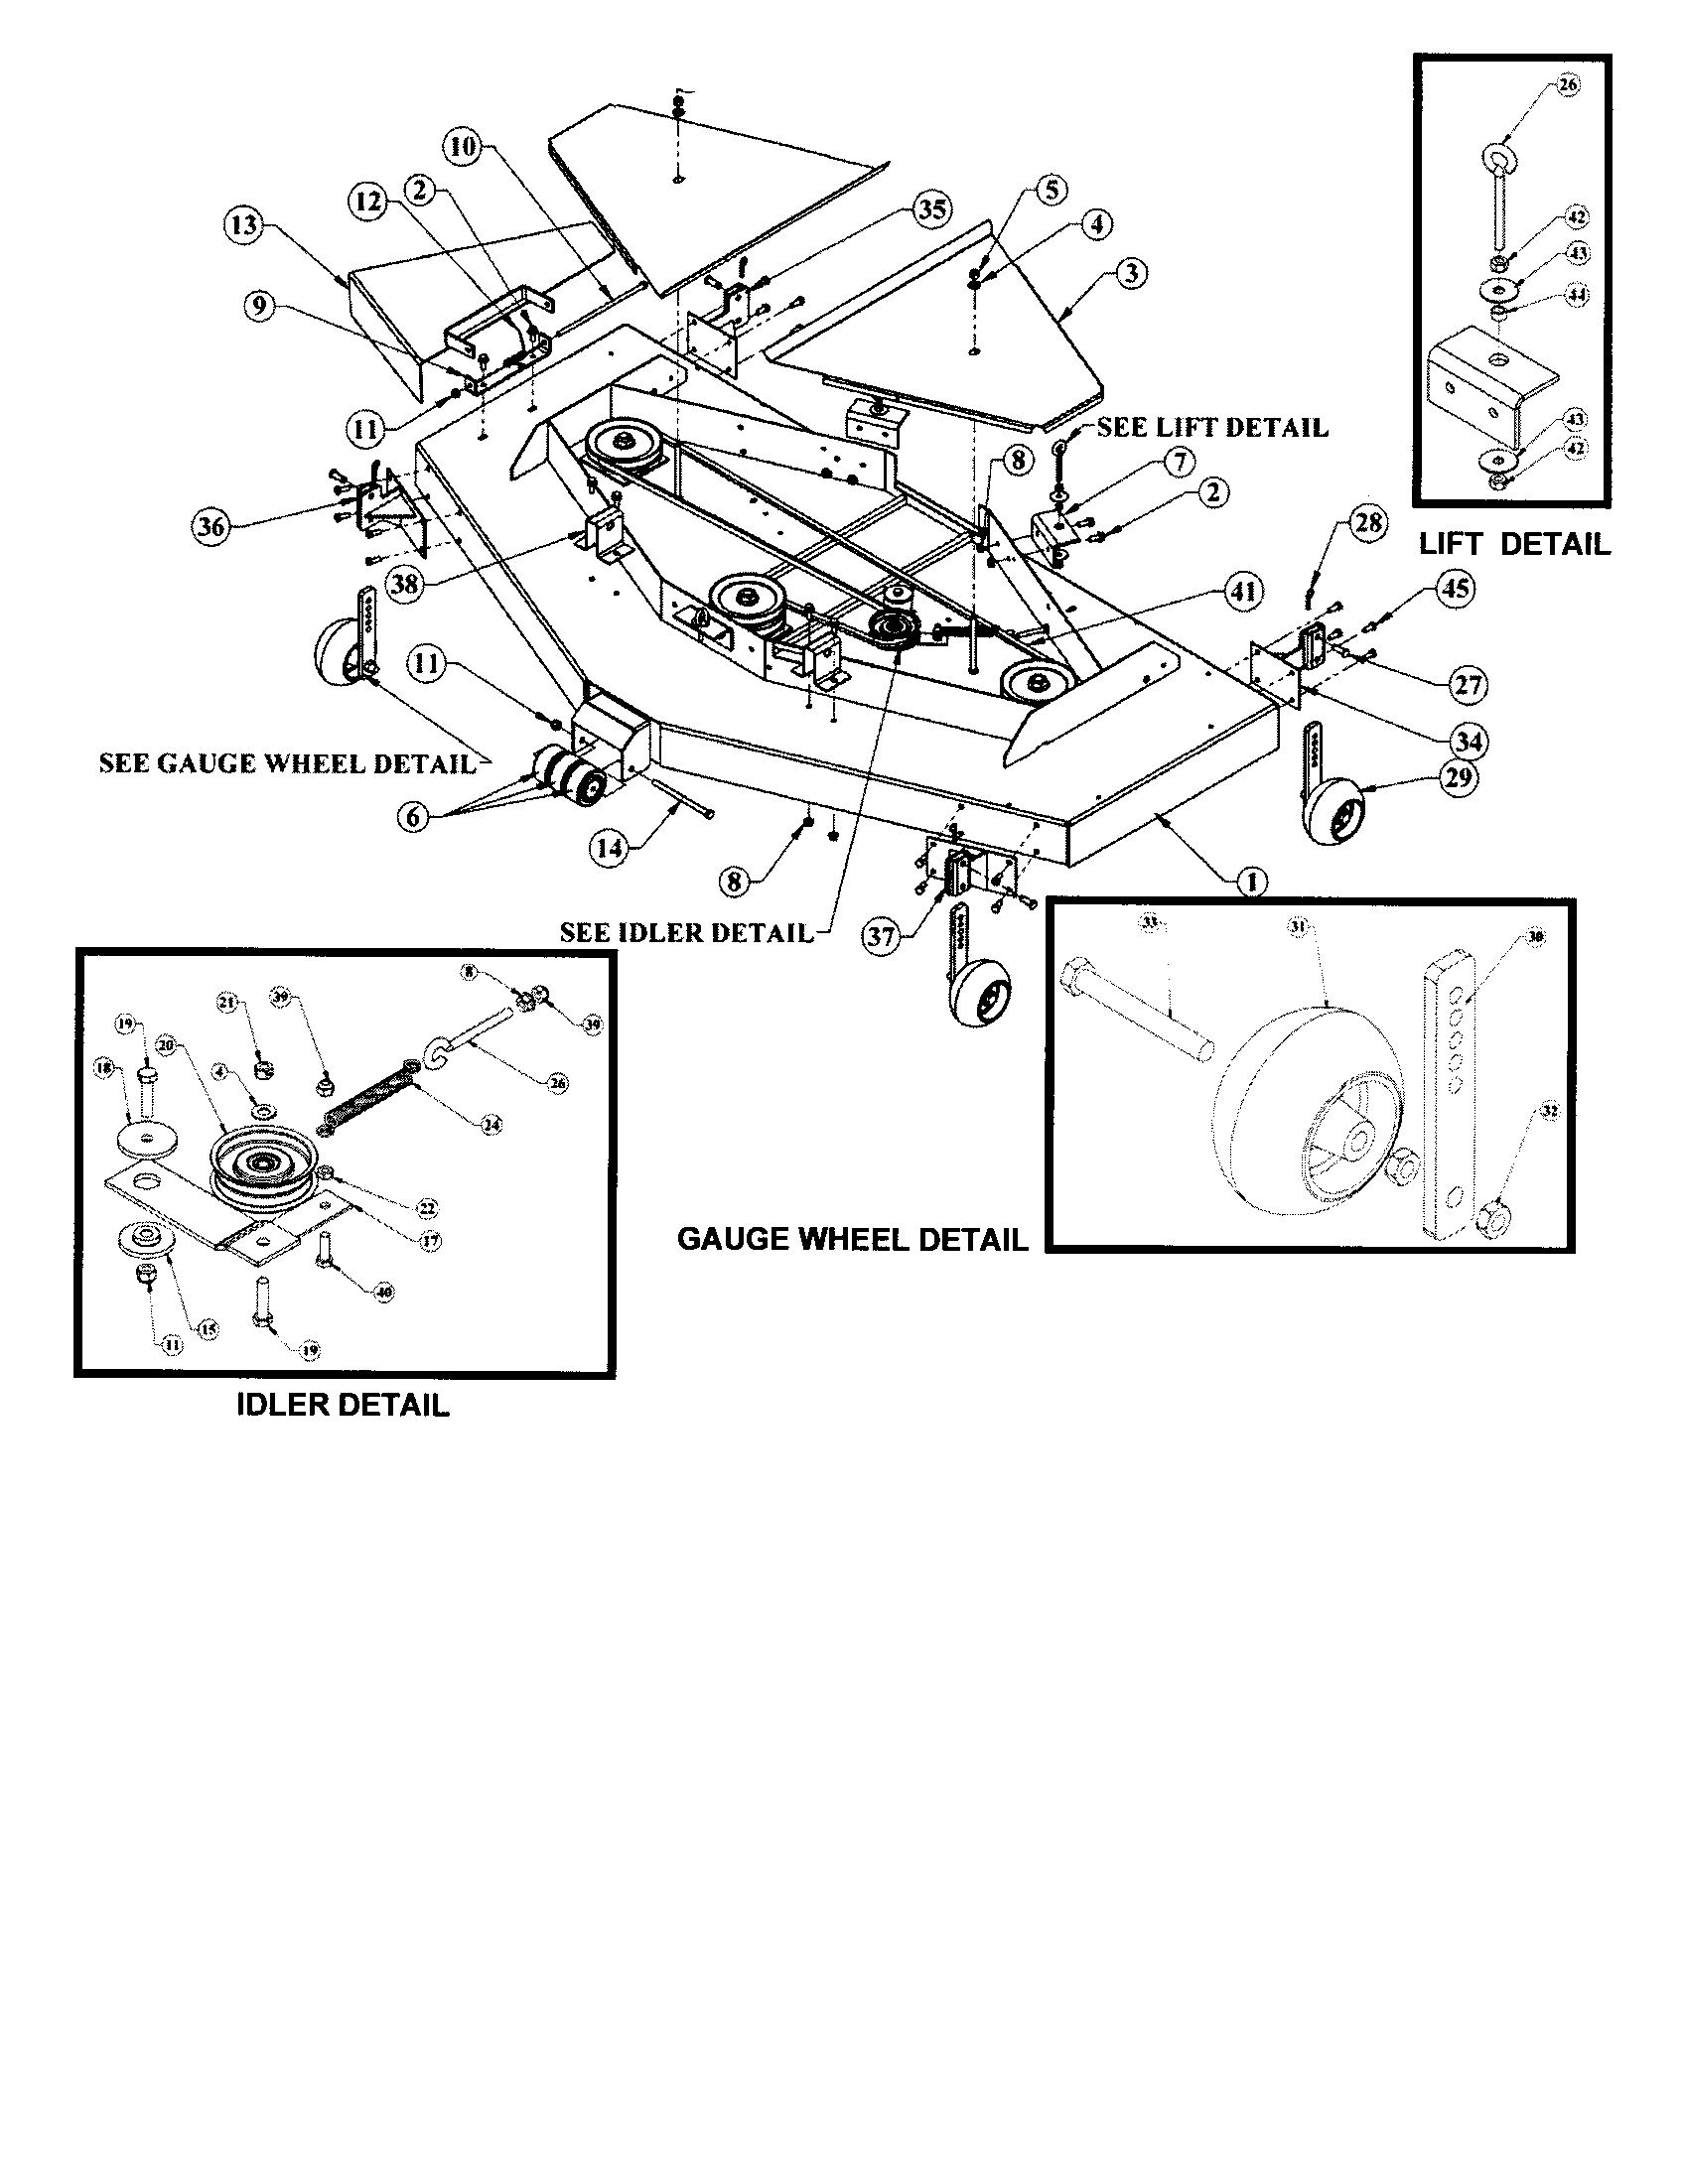 Scotts S1642 Lawn Mower Wiring Diagram